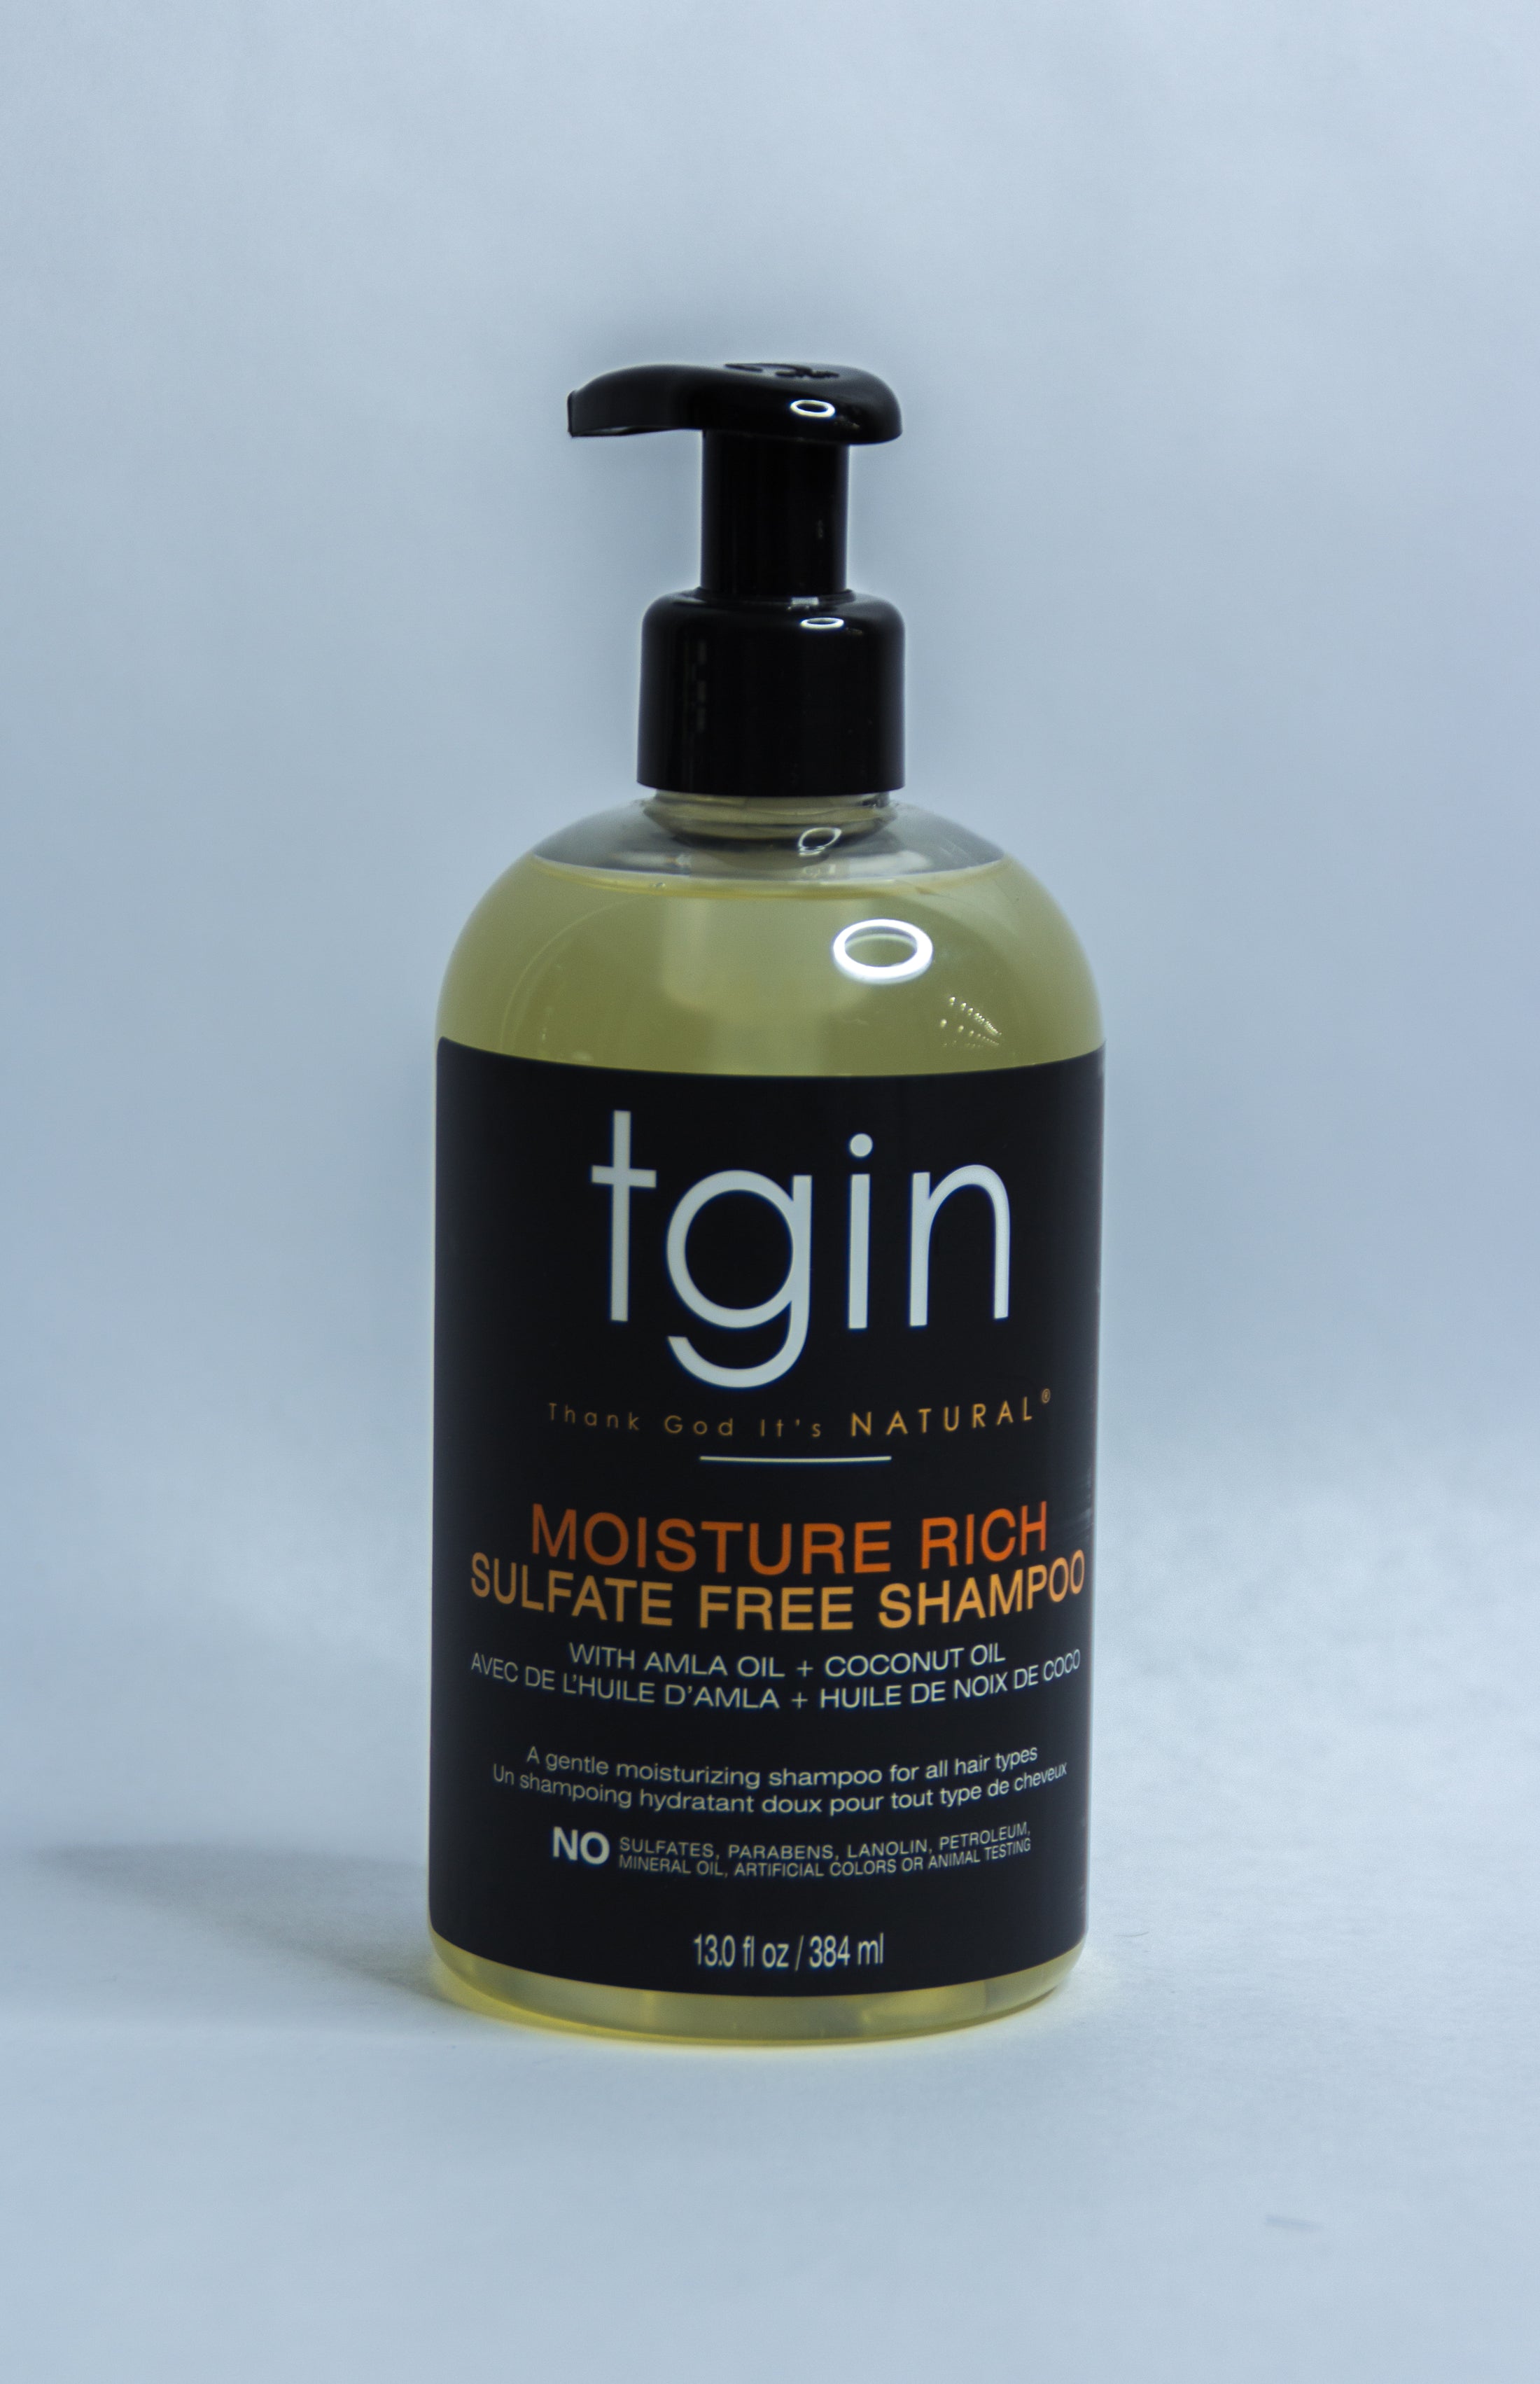 TGIN ( Thank god it's natural ) Moisture rich shampoo